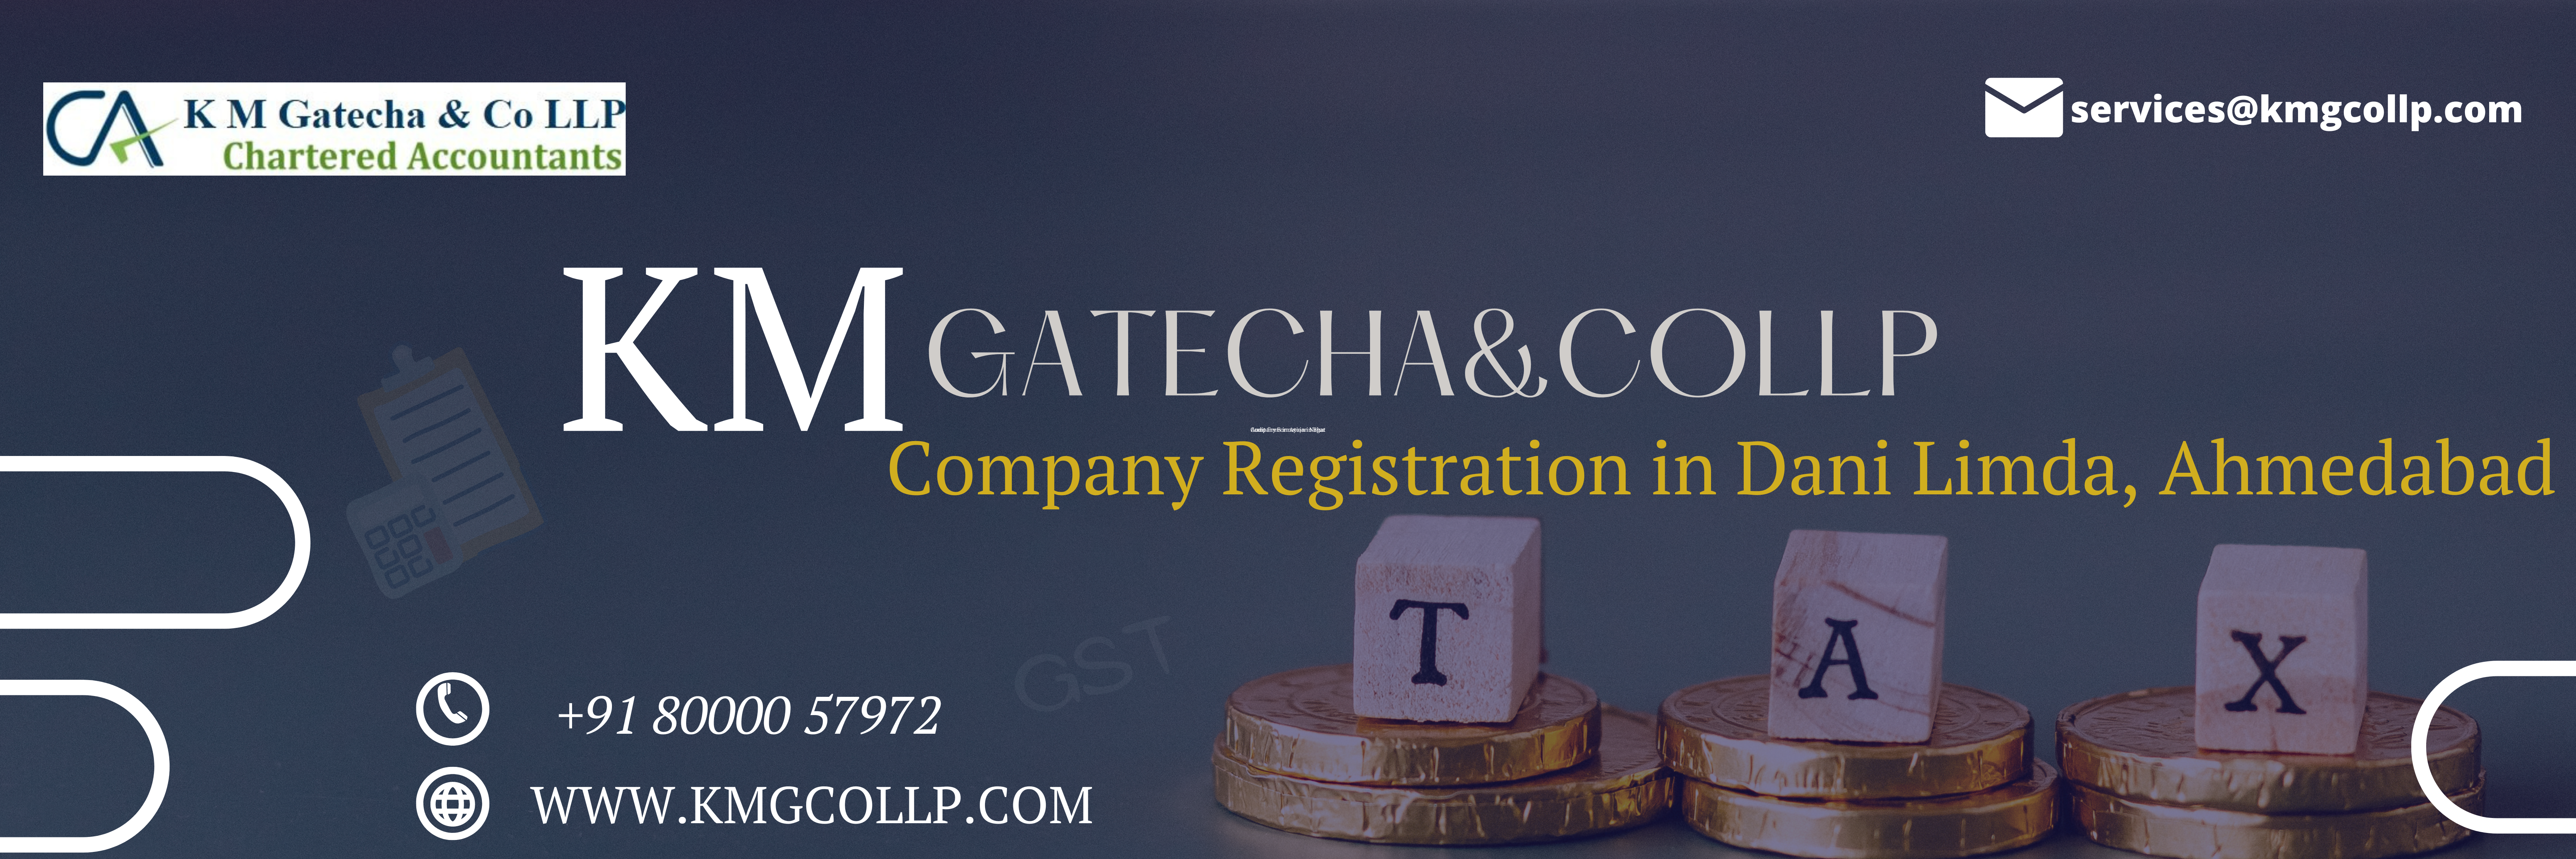 Company Registration in Dani Limda, Ahmedabad